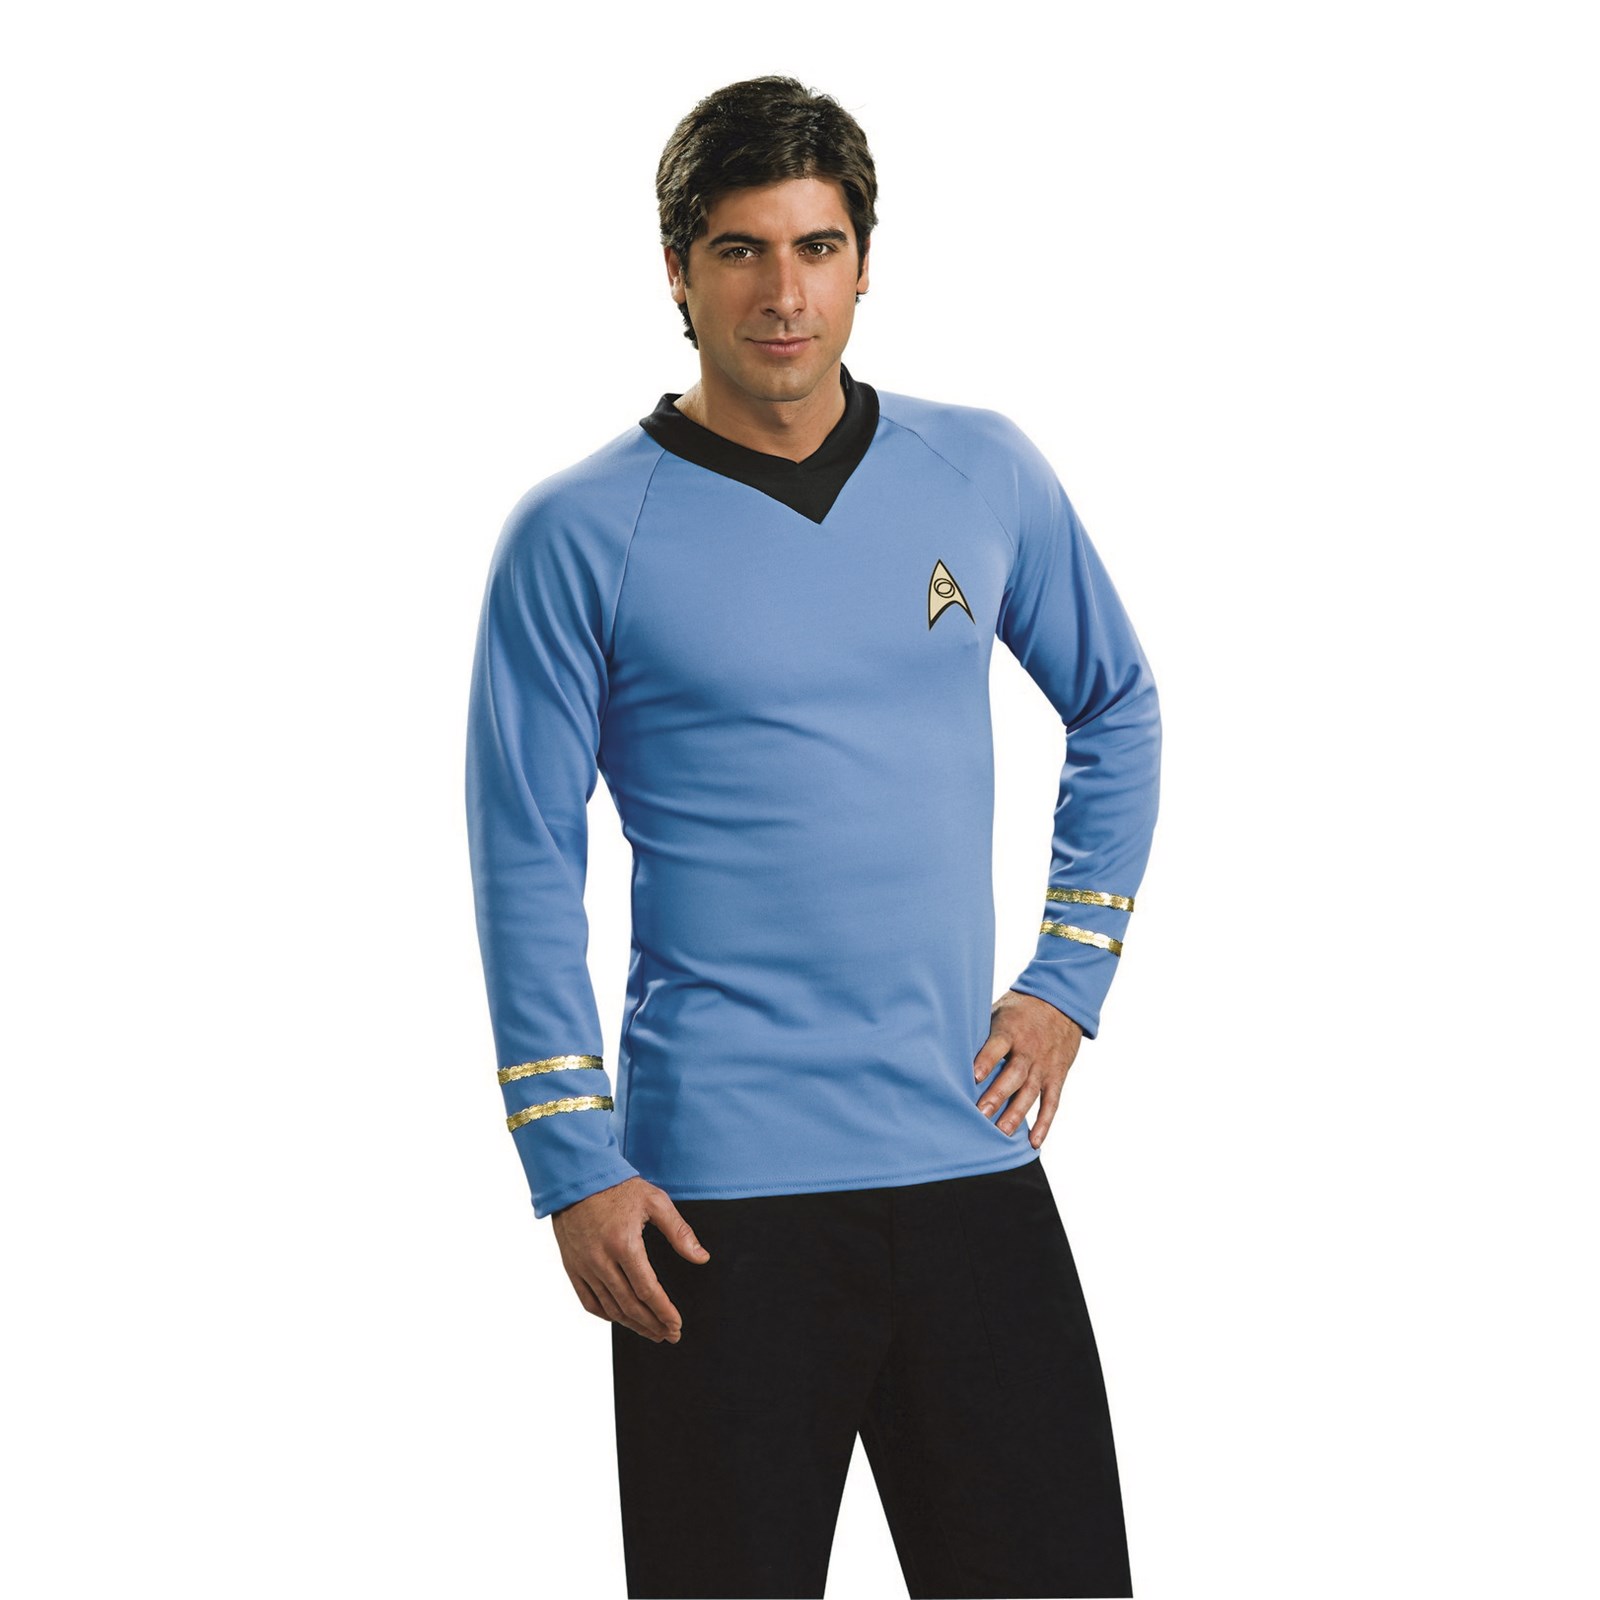 Men's Star Trek Classic Blue Shirt Costume by Rubie's - Size Medium - image 1 of 2